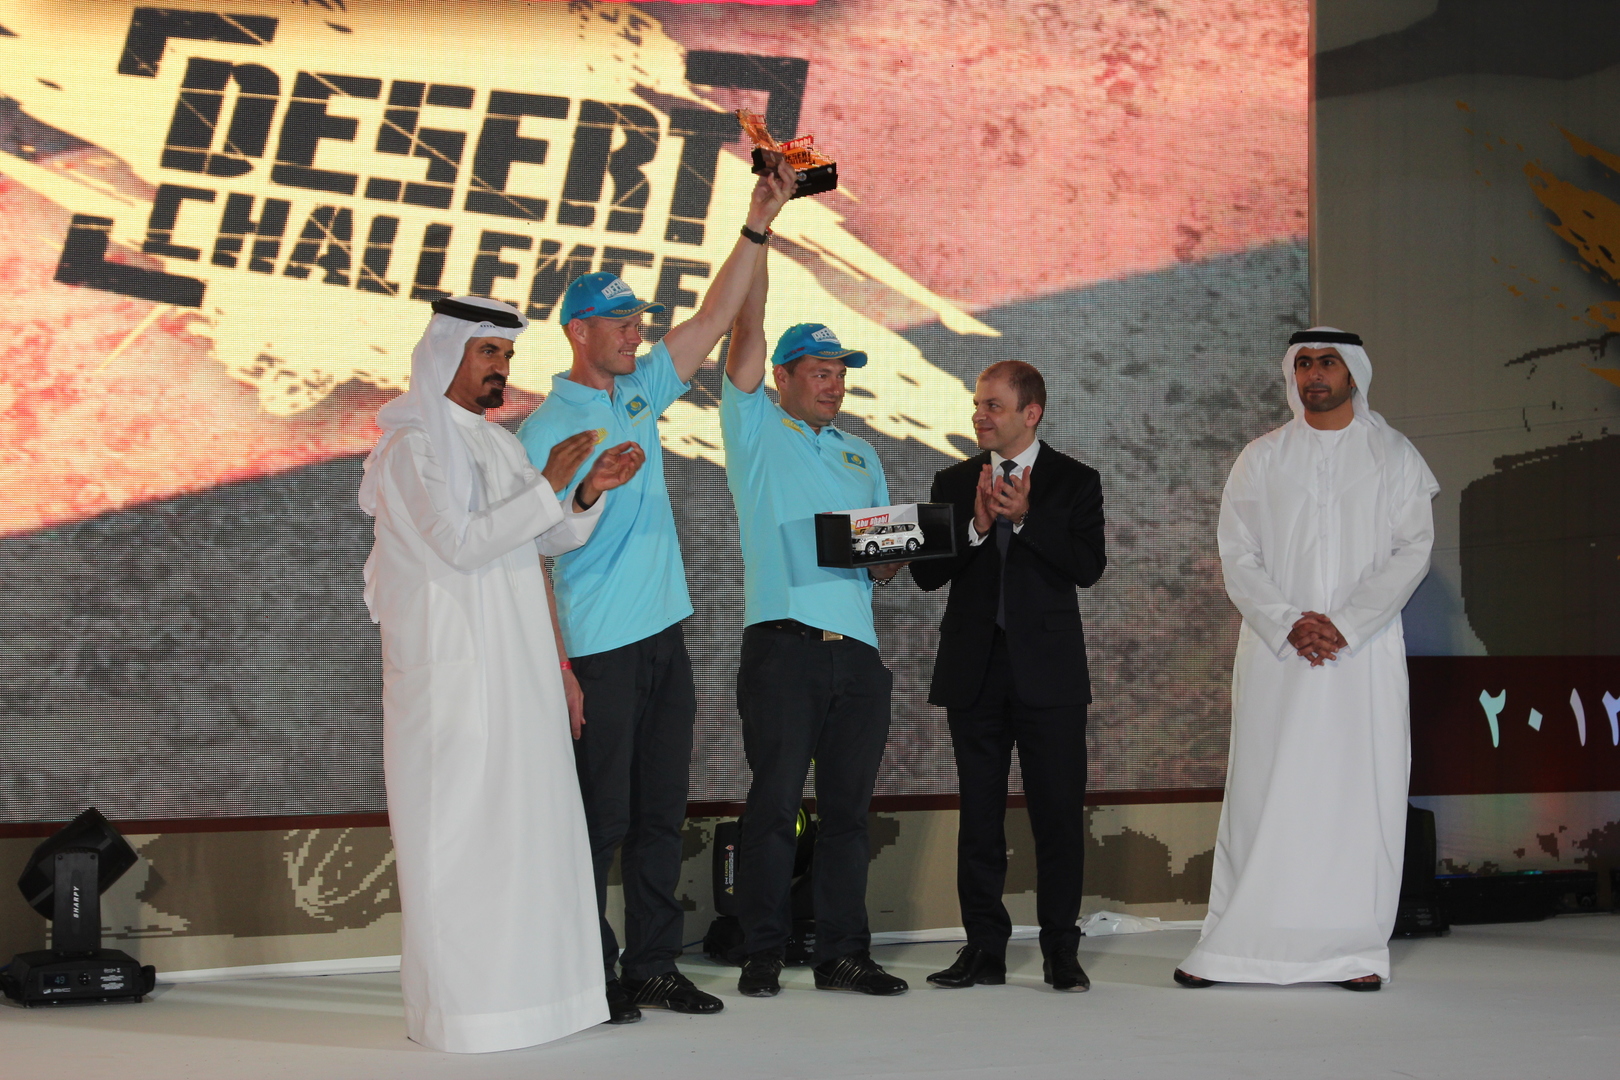 победители Abu Dhabi Desert Challenge 2013 в категории T2